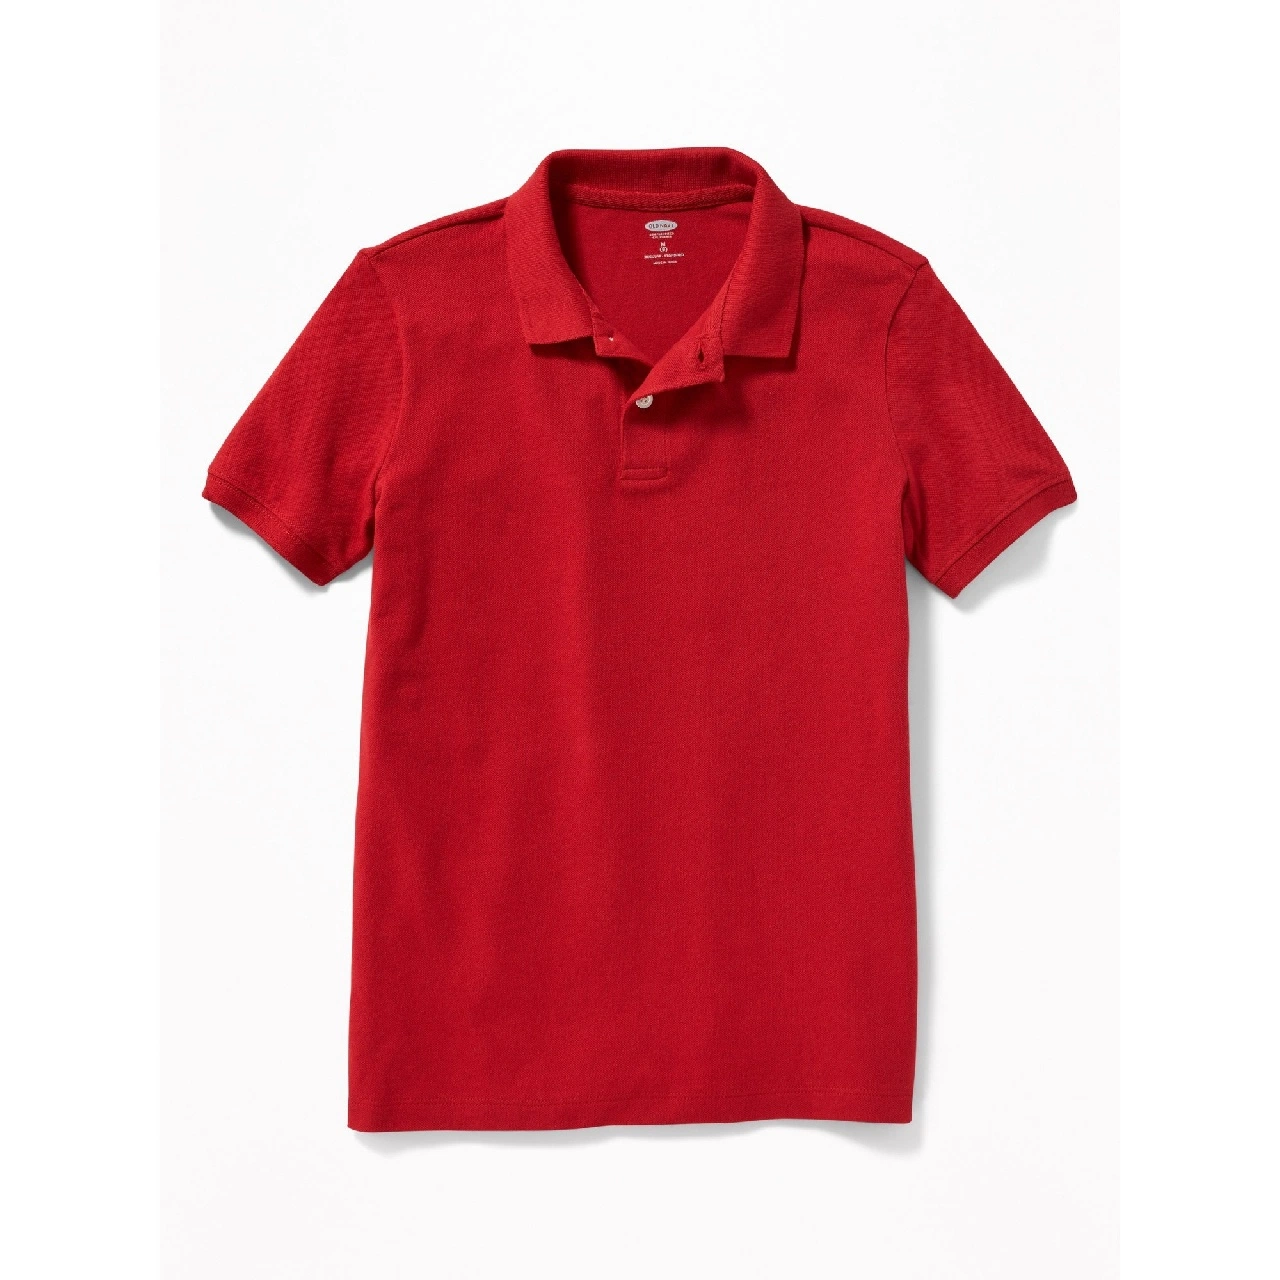 Children Blank School Uniform Polo Shirt Boys Cotton Short Sleeve T Shirt Baby Embroidery Plain Apparel